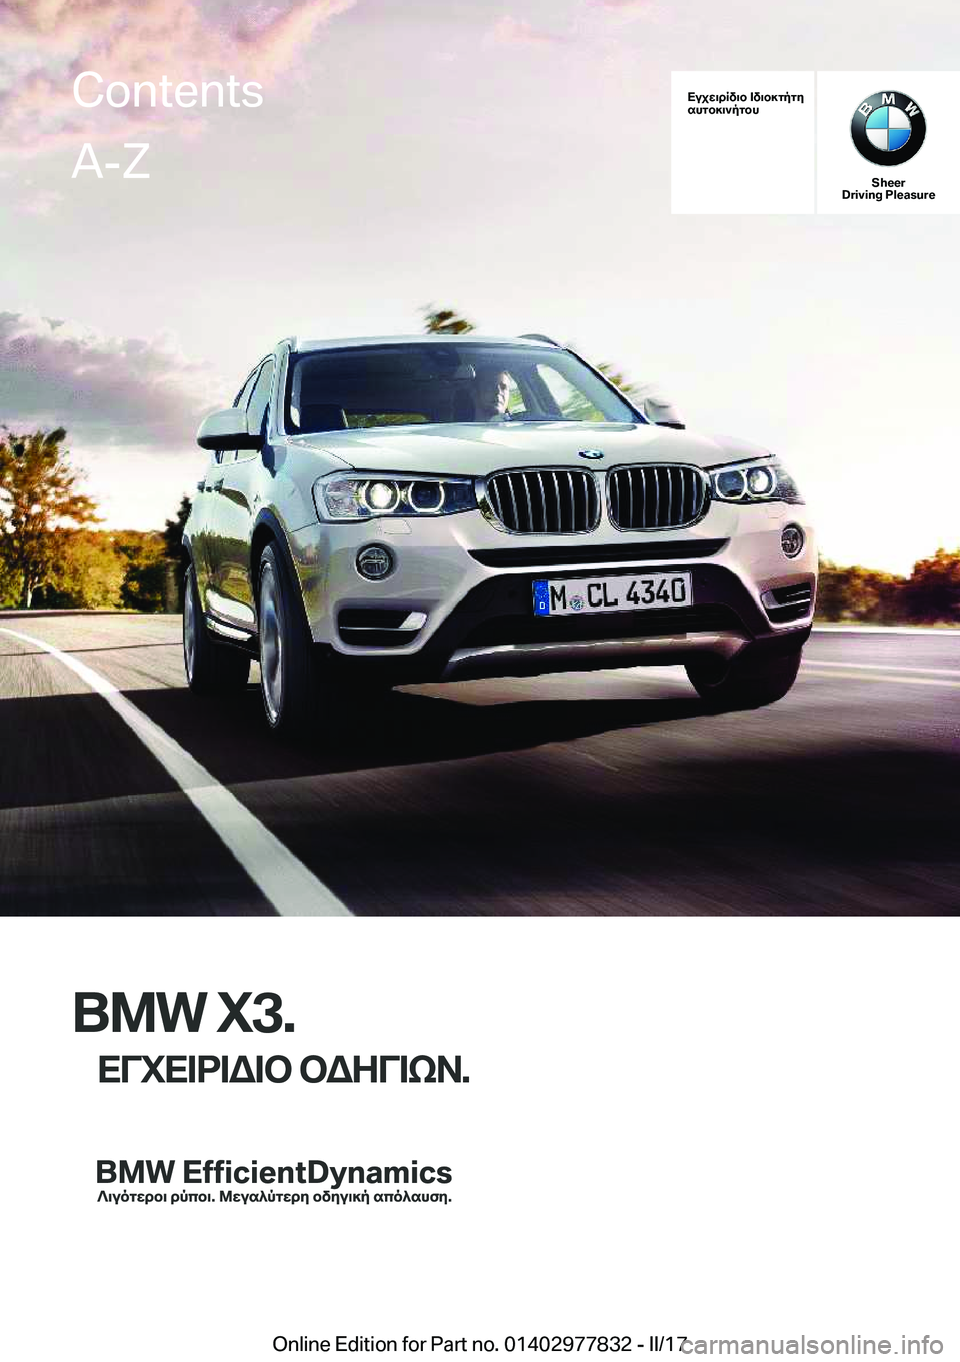 BMW X3 2017  ΟΔΗΓΌΣ ΧΡΉΣΗΣ (in Greek) Xujw\dRv\b�=v\b]gpgy
shgb]\`pgbh
�S�h�e�e�r
�D�r�i�v�i�n�g��P�l�e�a�s�u�r�e
�B�M�W��X�3�.
XViX=d=W=b�bW;V=kA�.
�C�o�n�t�e�n�t�s�A�-�Z
�O�n�l�i�n�e� �